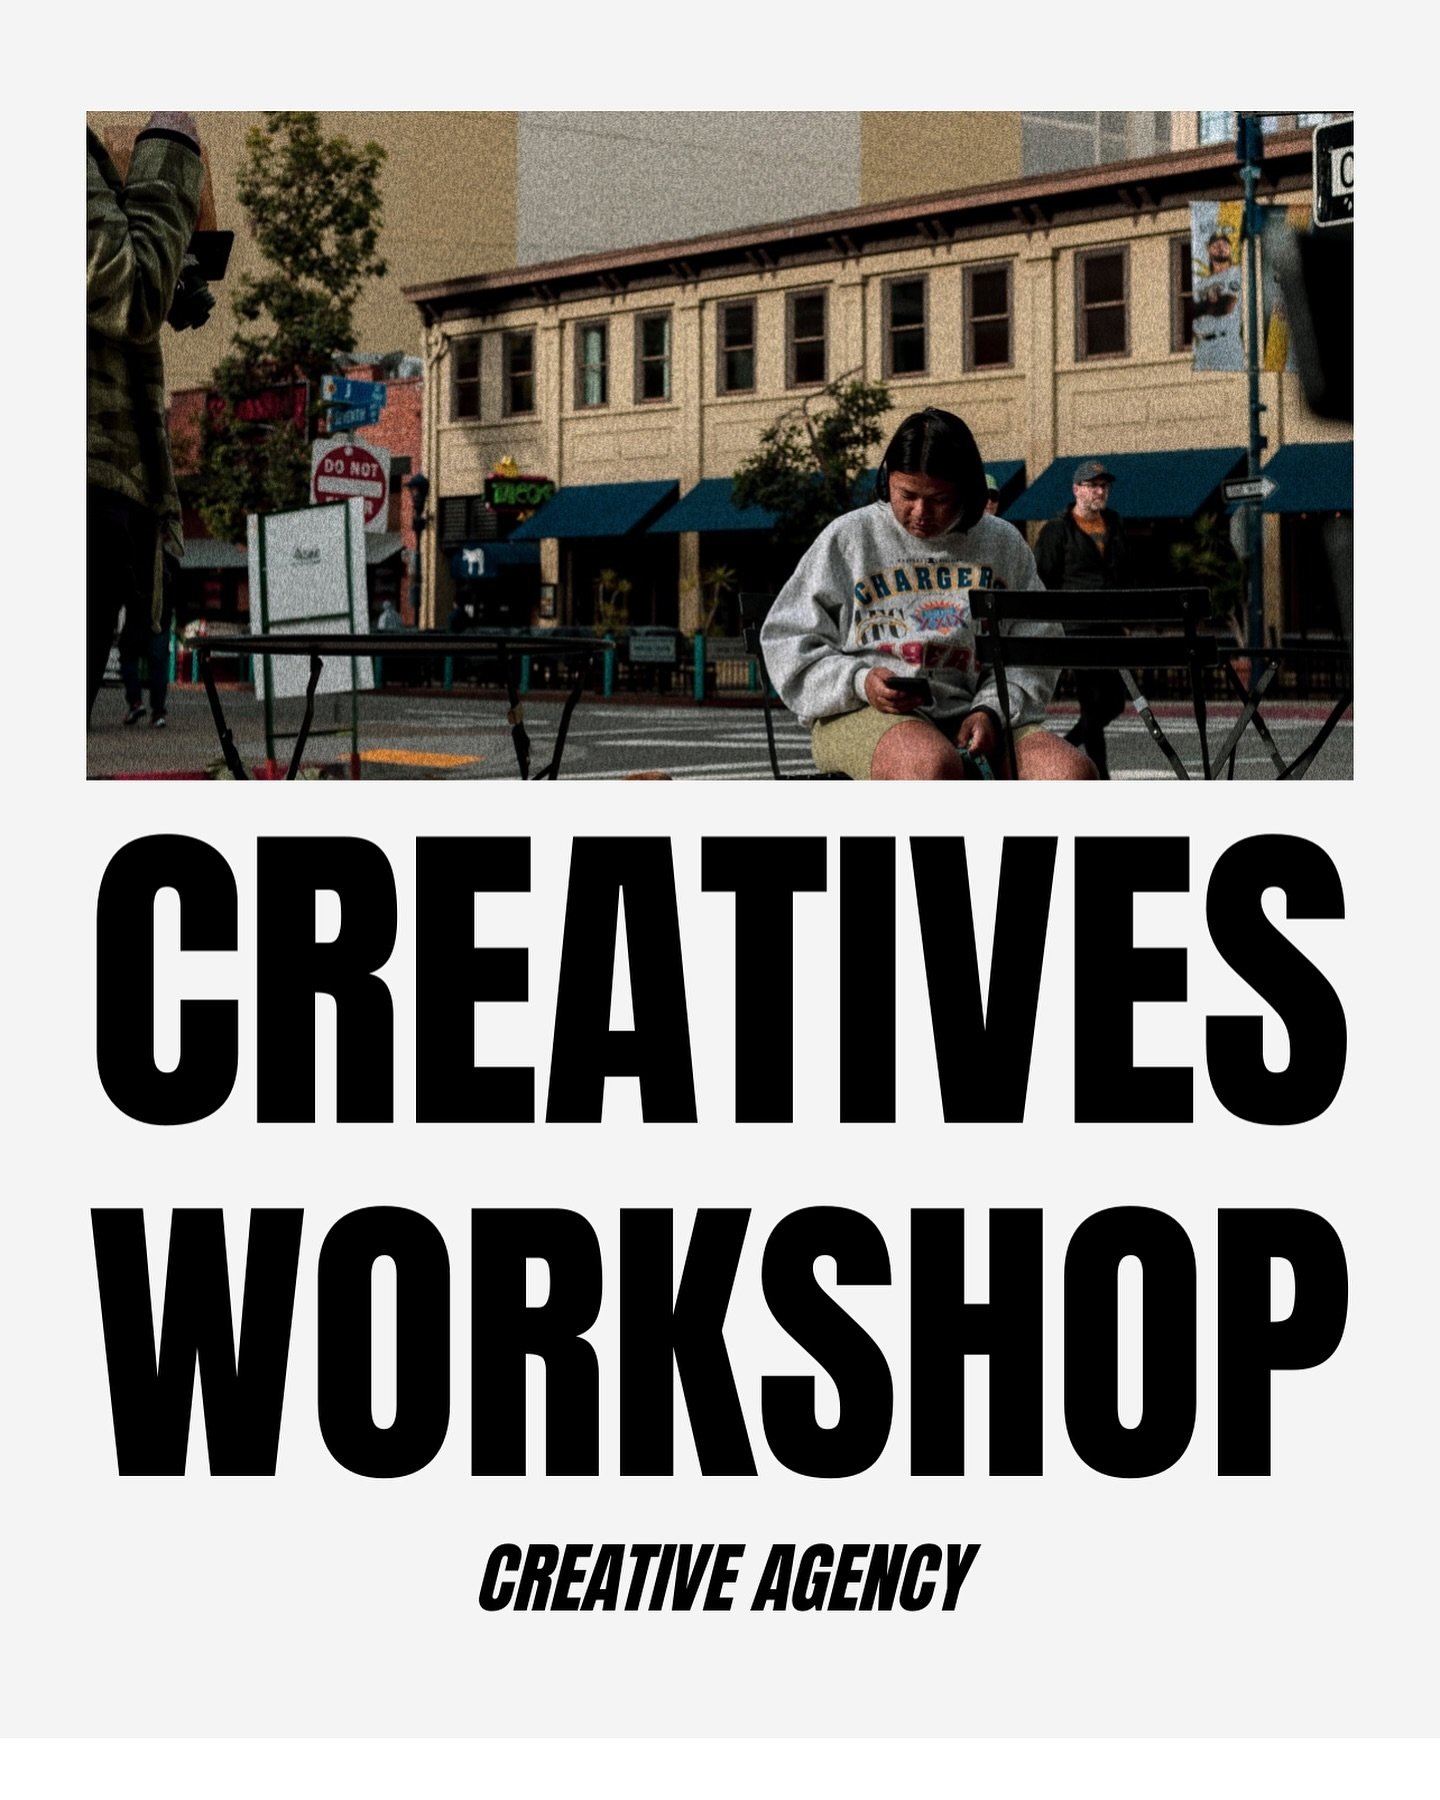 creativesworkshop.com
#contentcreator